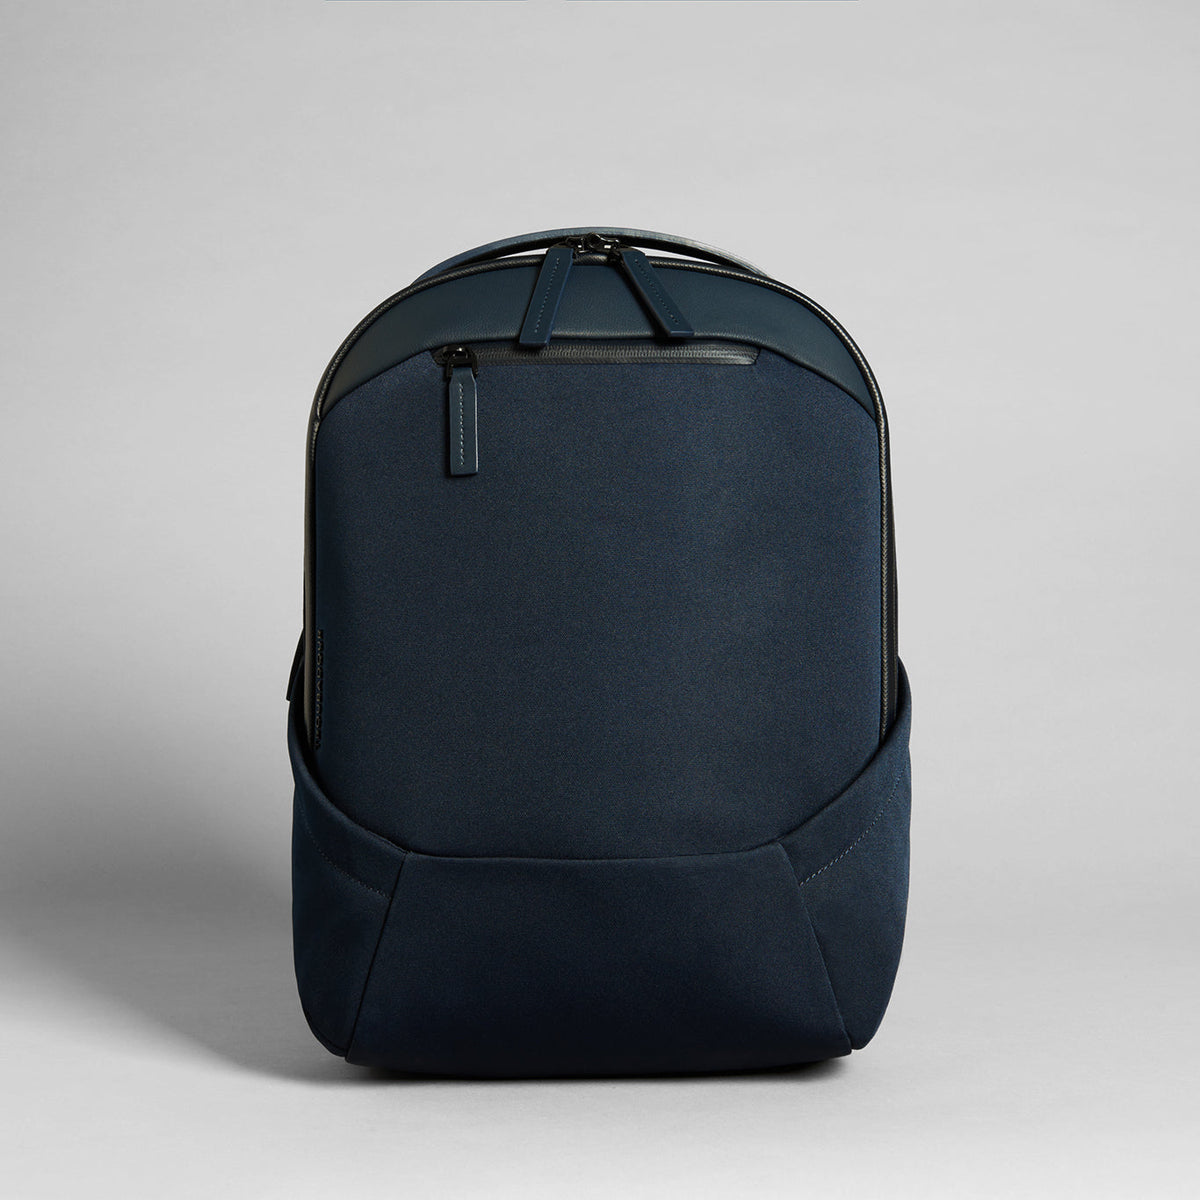 Troubadour Apex Compact Backpack 3.0